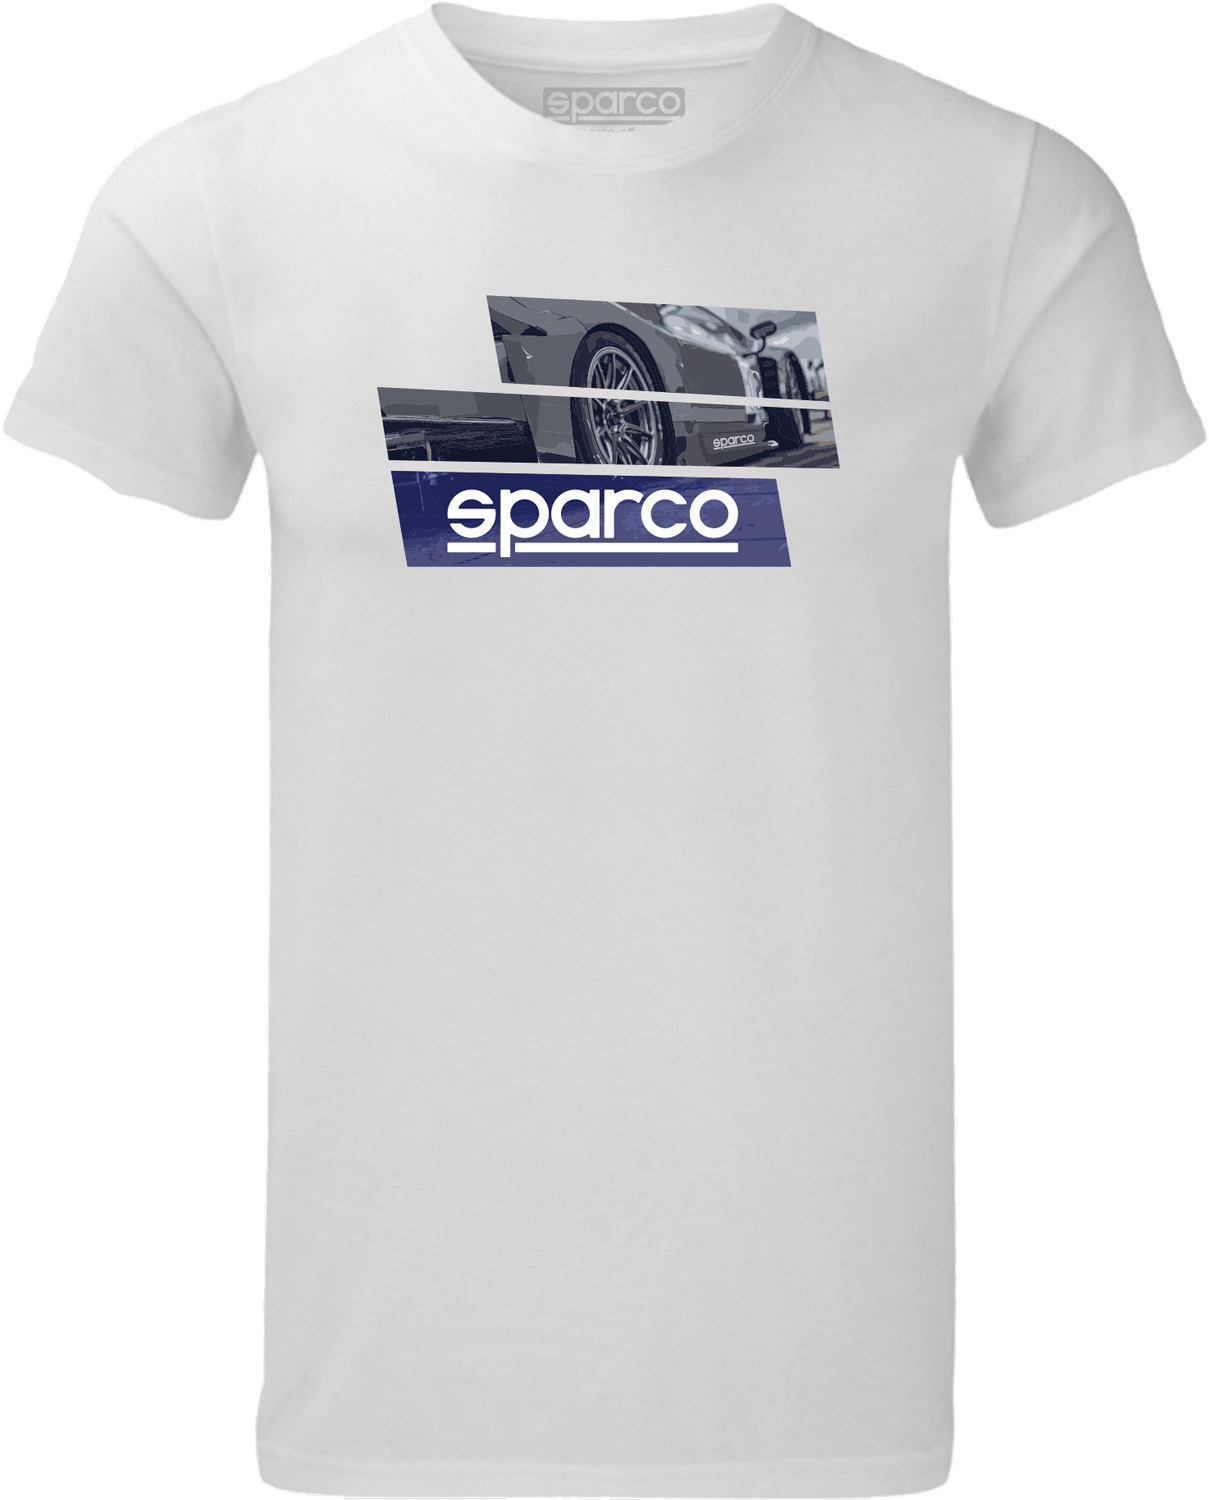 Sparco T-Shirt 1977, weiß